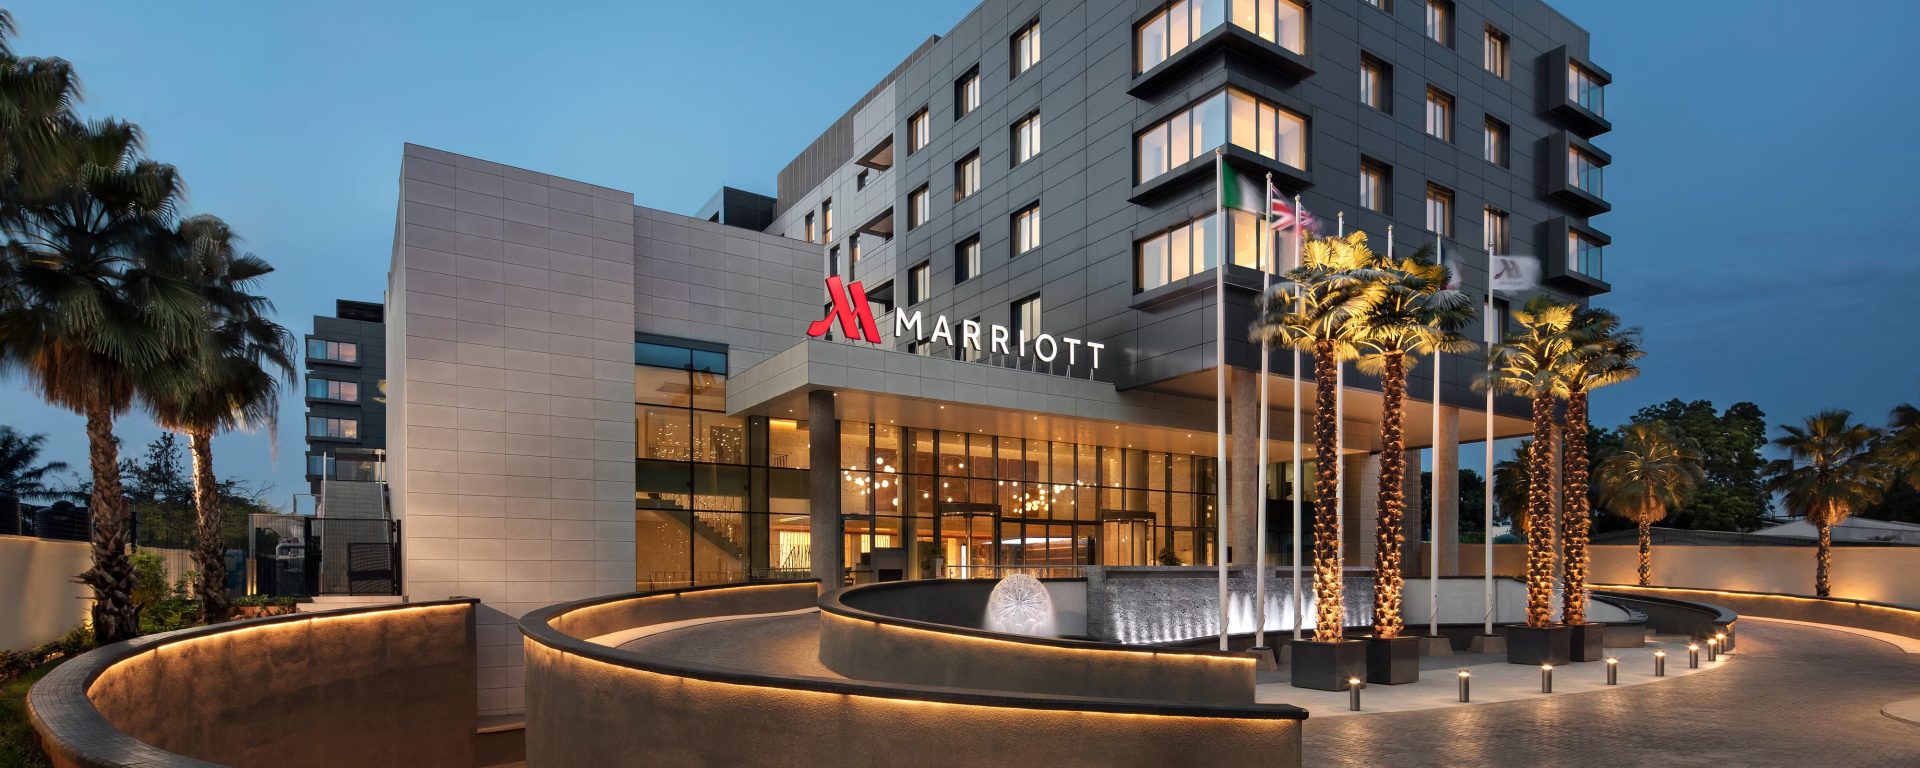 marriott-hotel-exterior